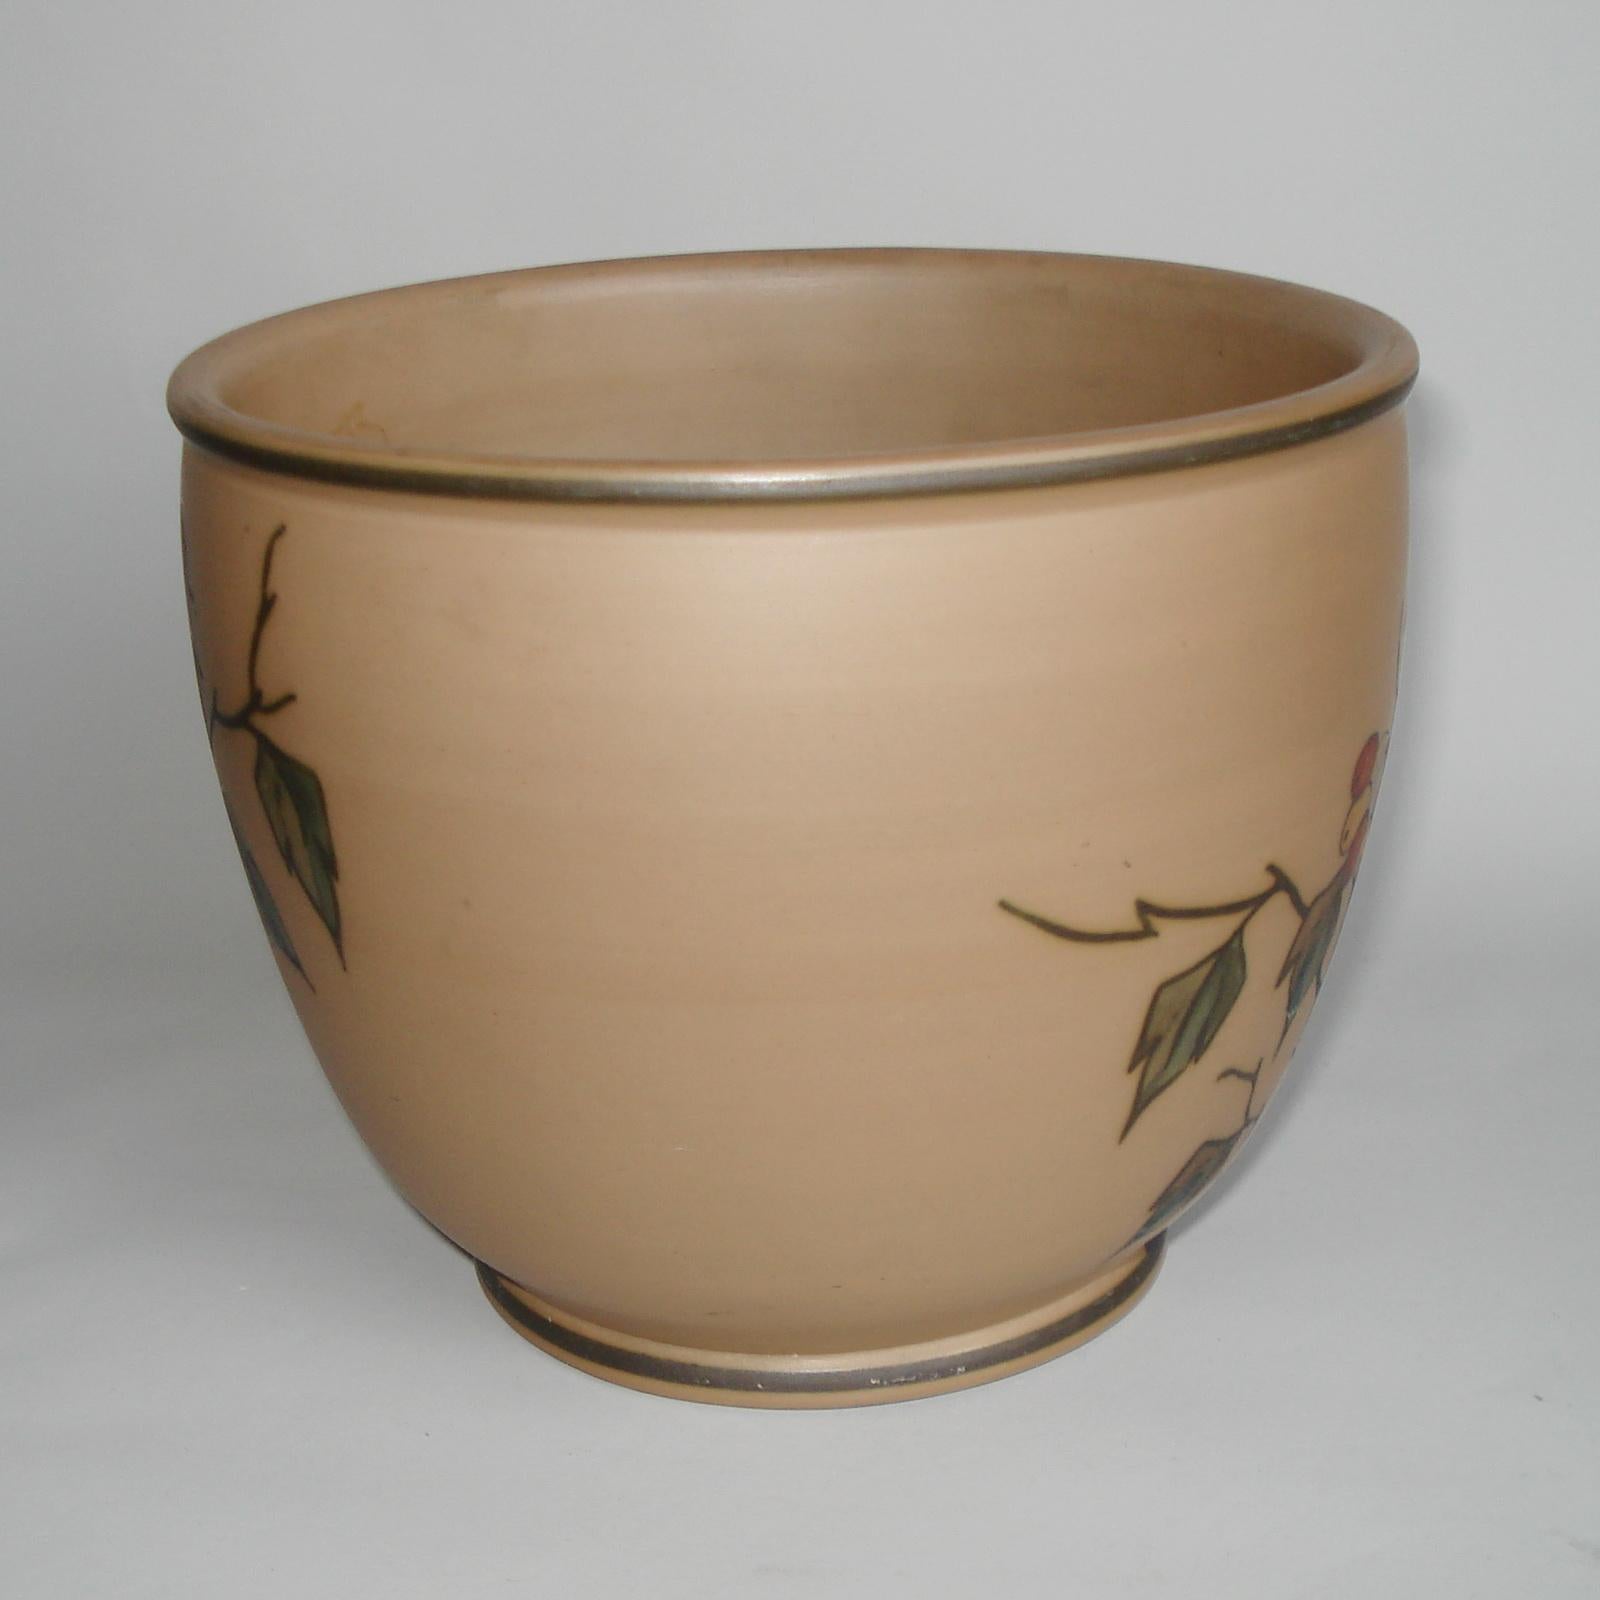 Art Deco Ceramic Flower Pot, Cachepot by Lauritz Hjorth, Bornholm, Denmark 1